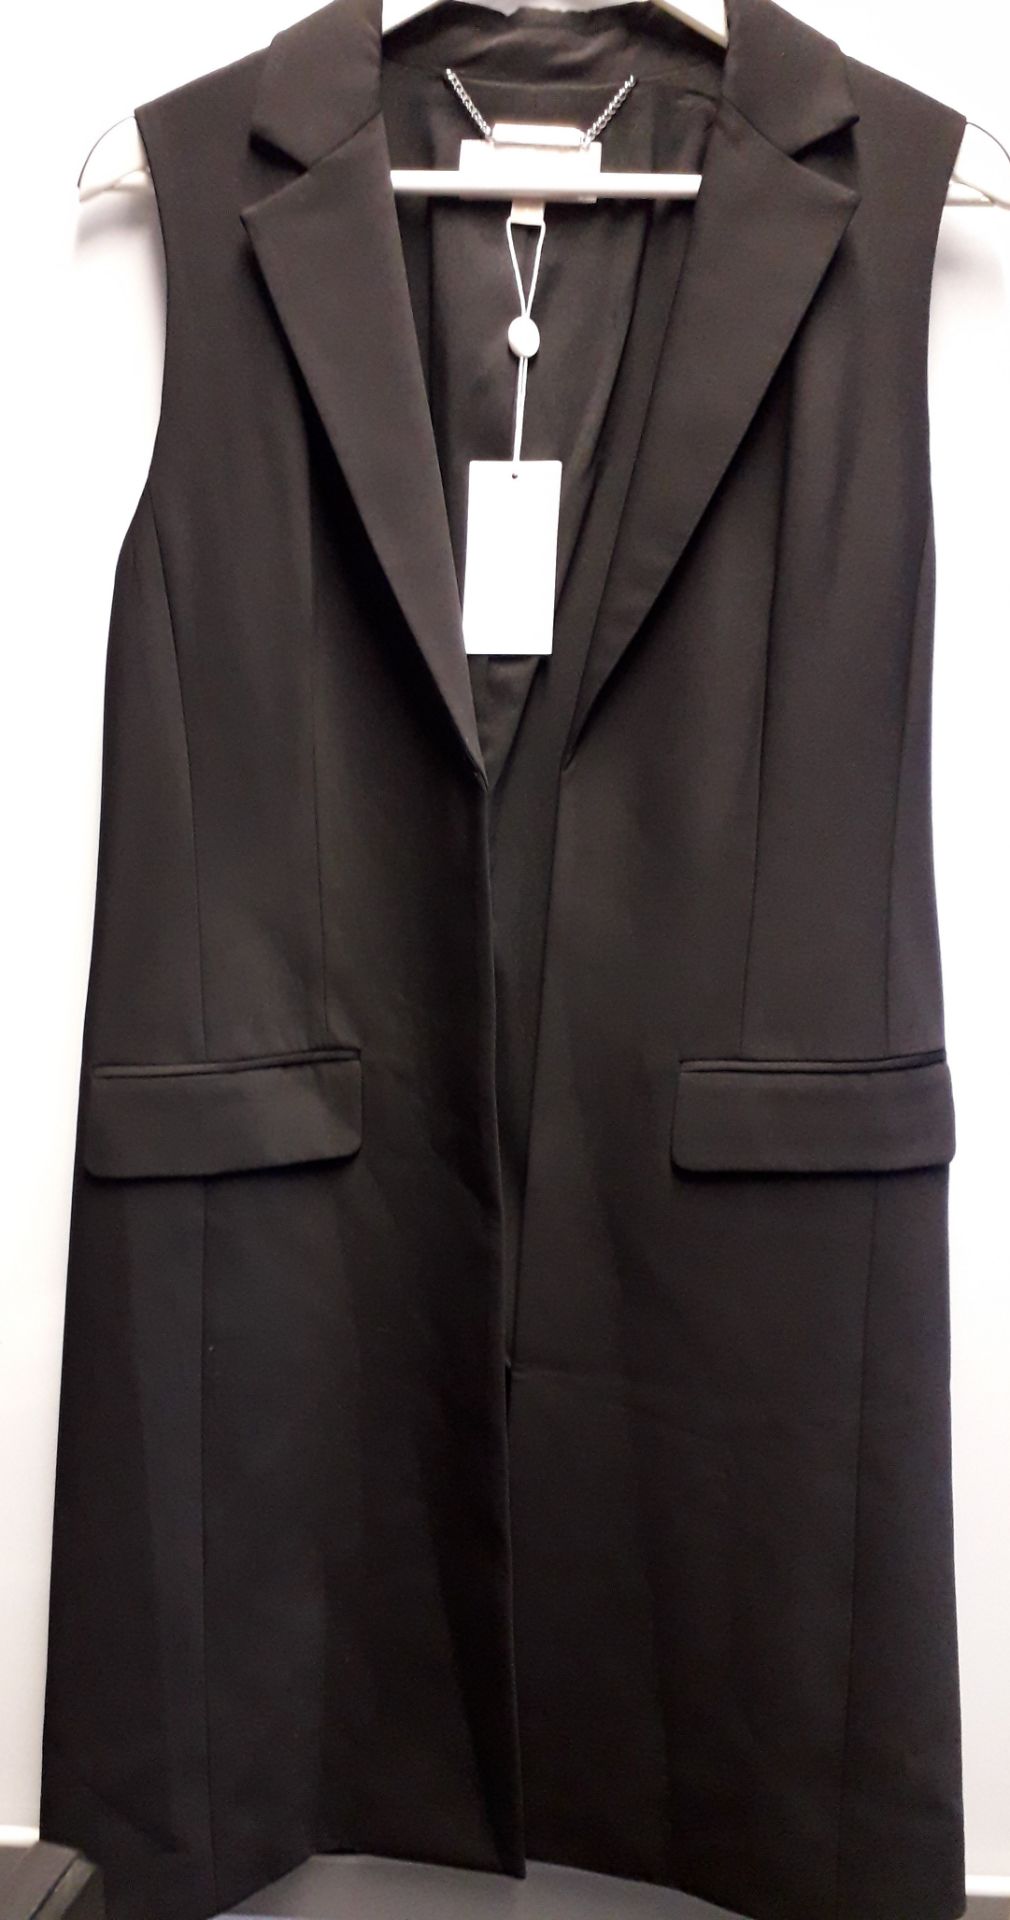 1 x Michael Kors Black Longline Sleeveless Jacket - Size: 10 - Material: 96% Wool, 4% Elastane.